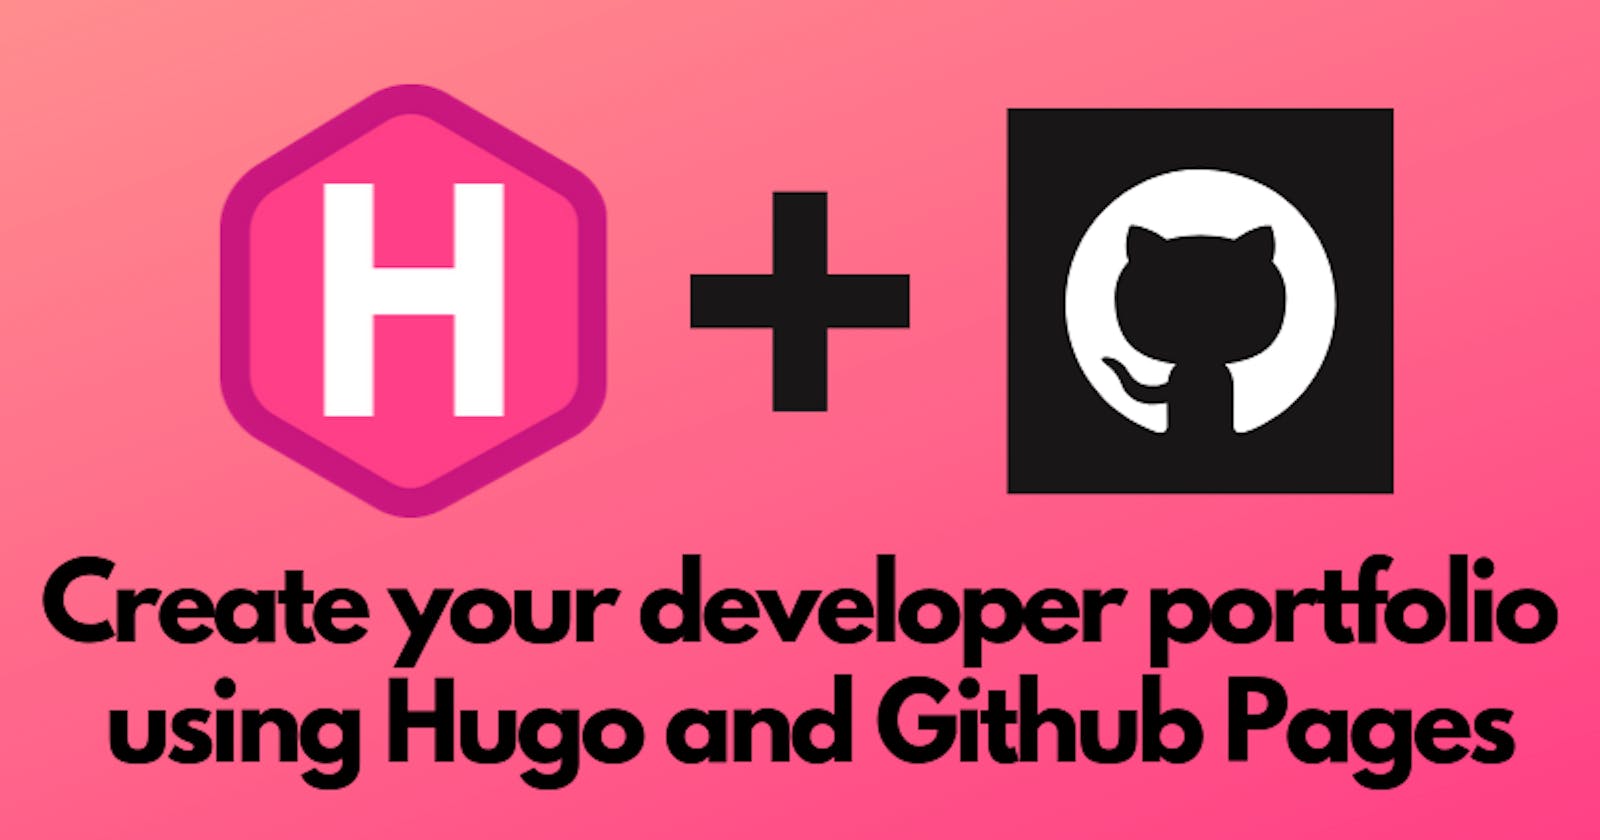 Create your developer portfolio using Hugo and Github Pages